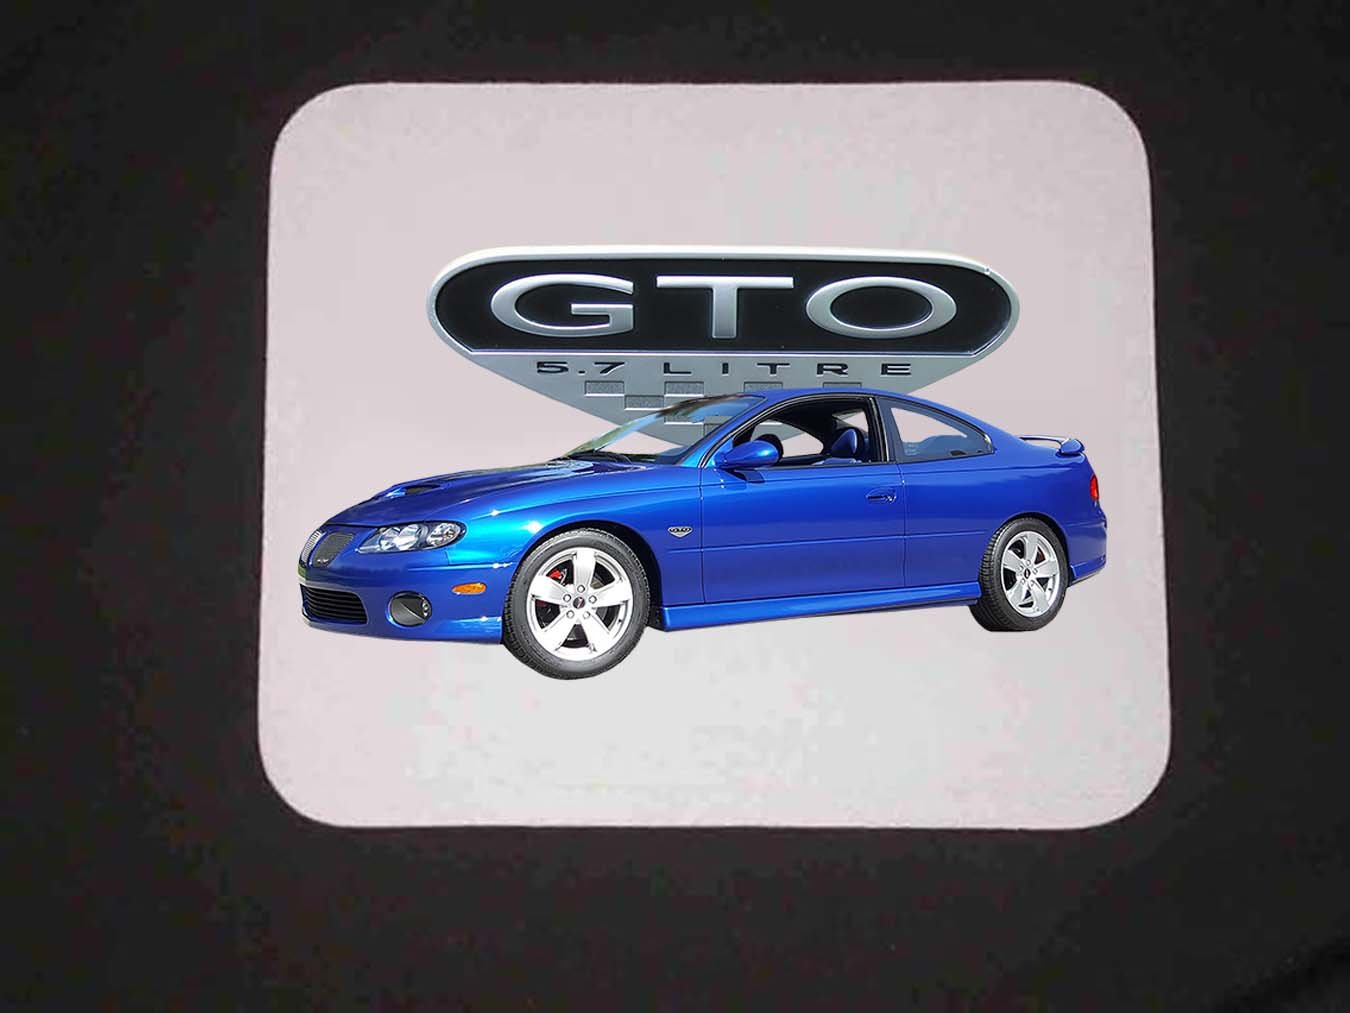 New 2005 Pontiac GTO Mousepad!